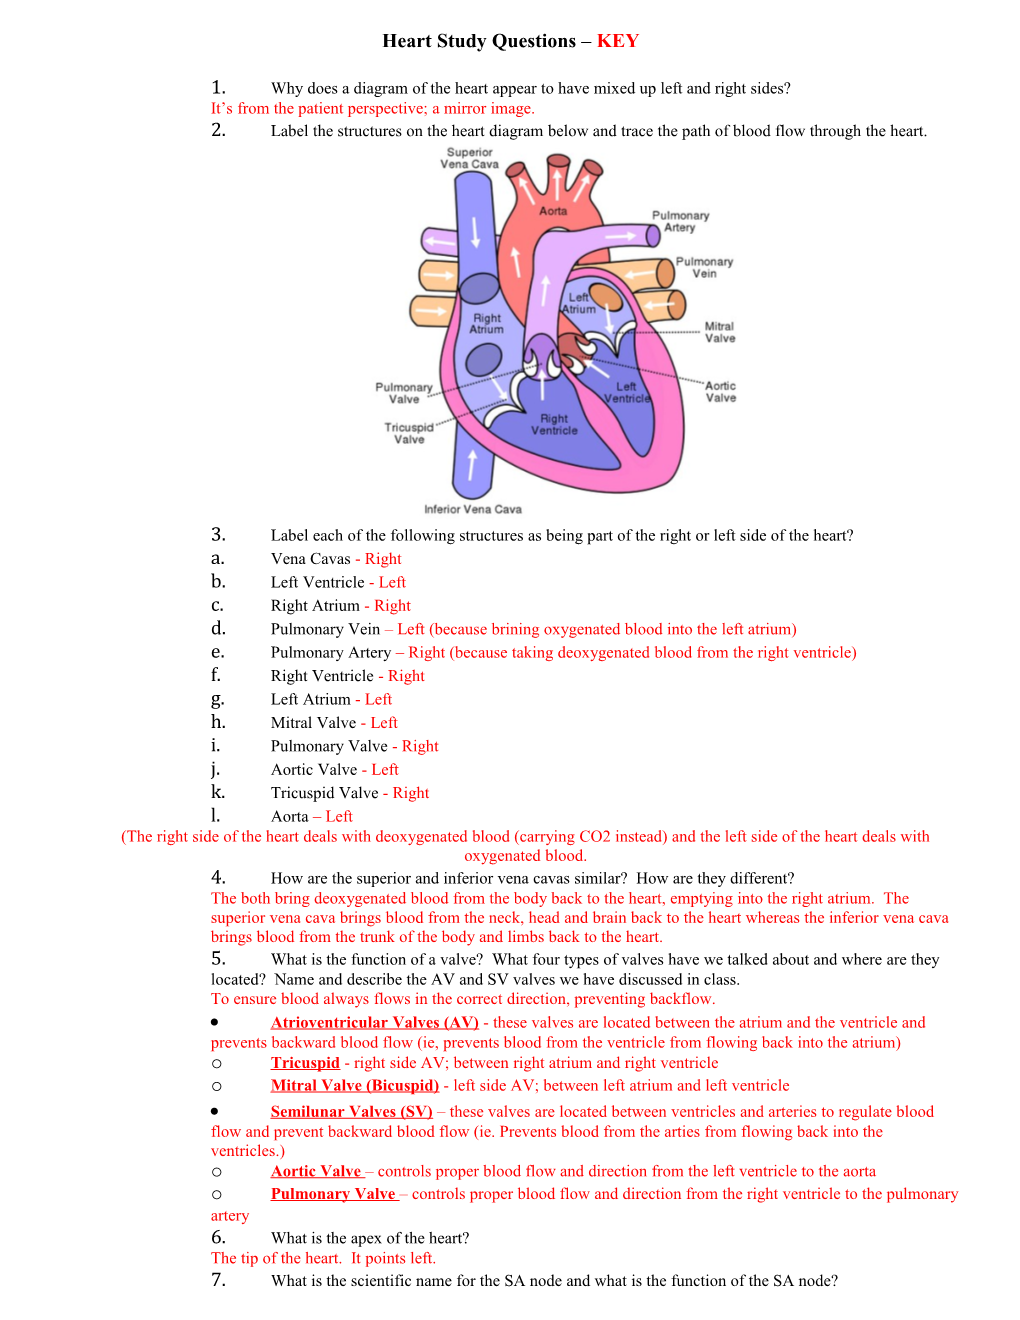 Heart Study Questions KEY